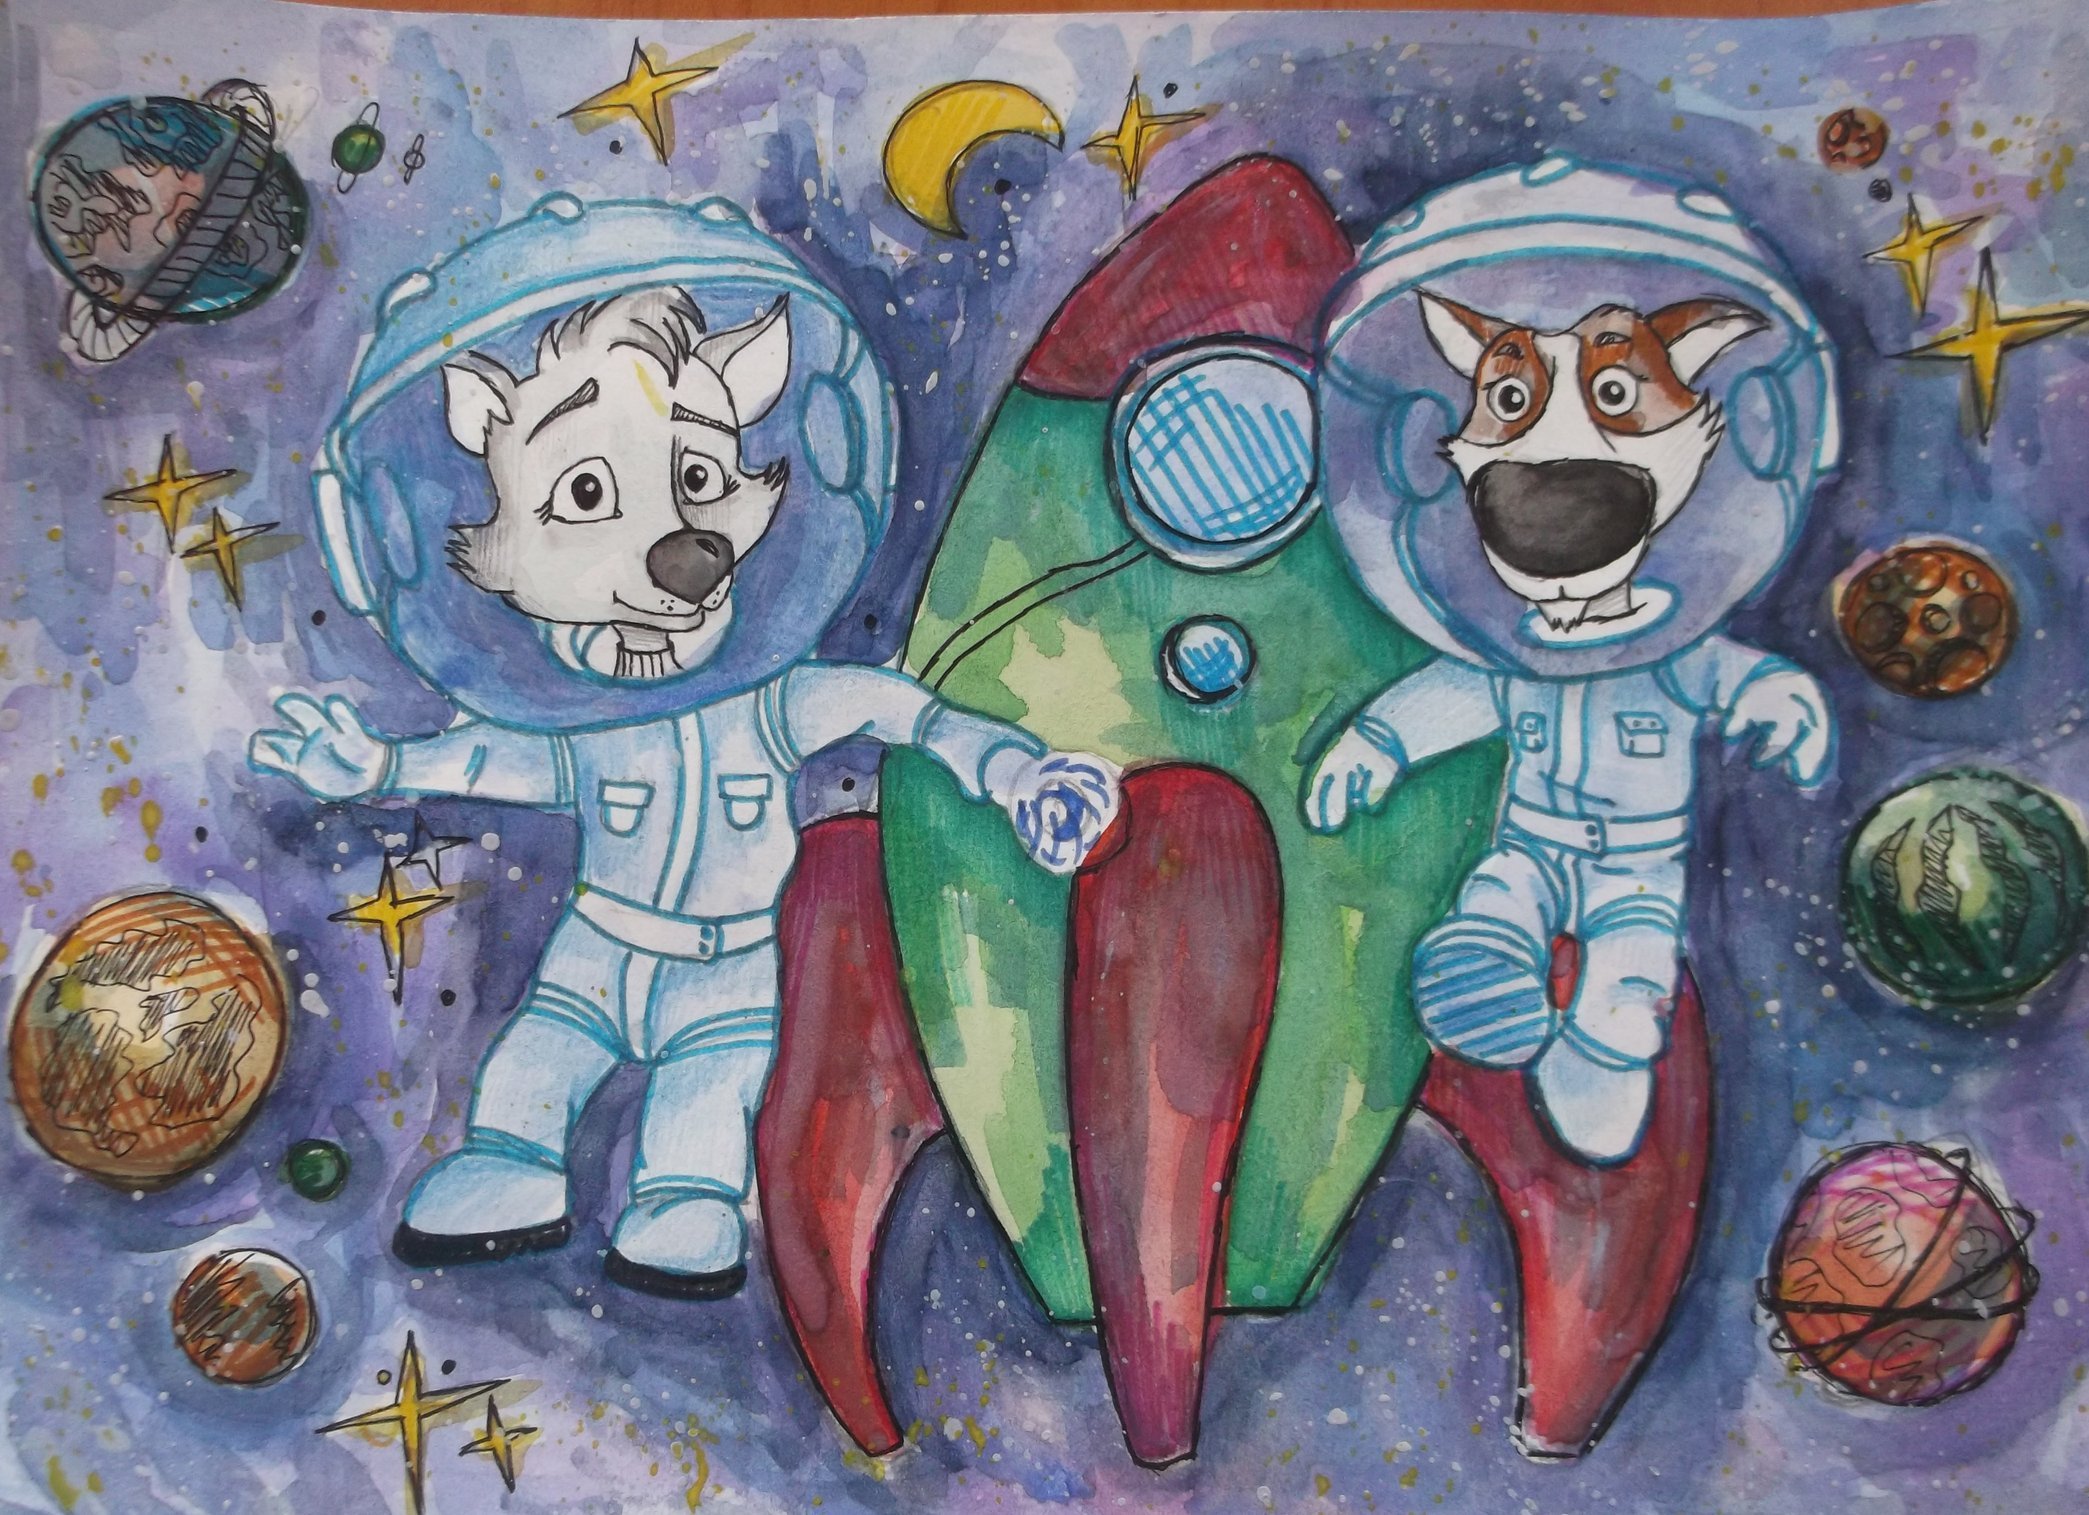 Рисунок на тему космонавтики 5 класс. Рисунок на тему космос. Рисунок на космическую тему. Рисунок космонавтики. Картина на день космонавтики.